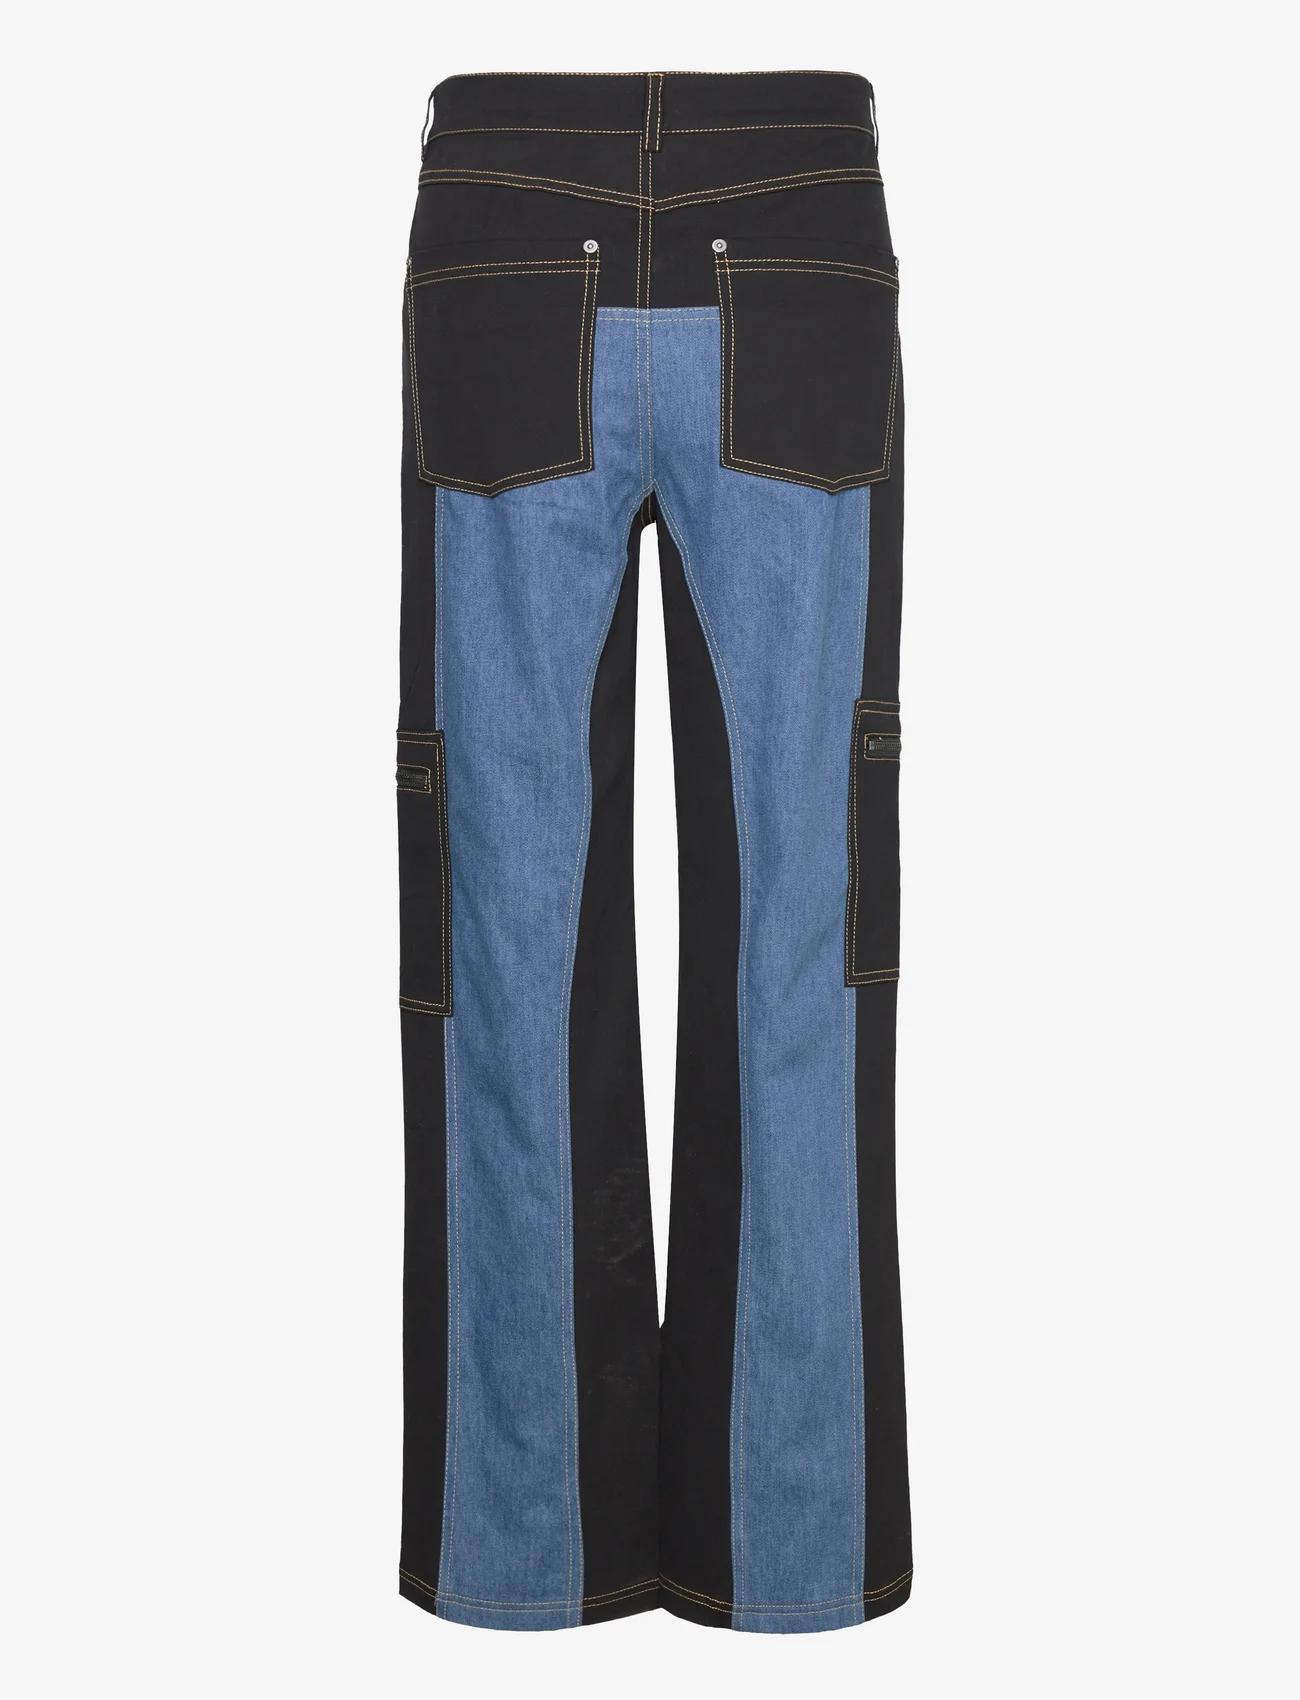 Sofie Schnoor - Trousers - brede jeans - black - 1